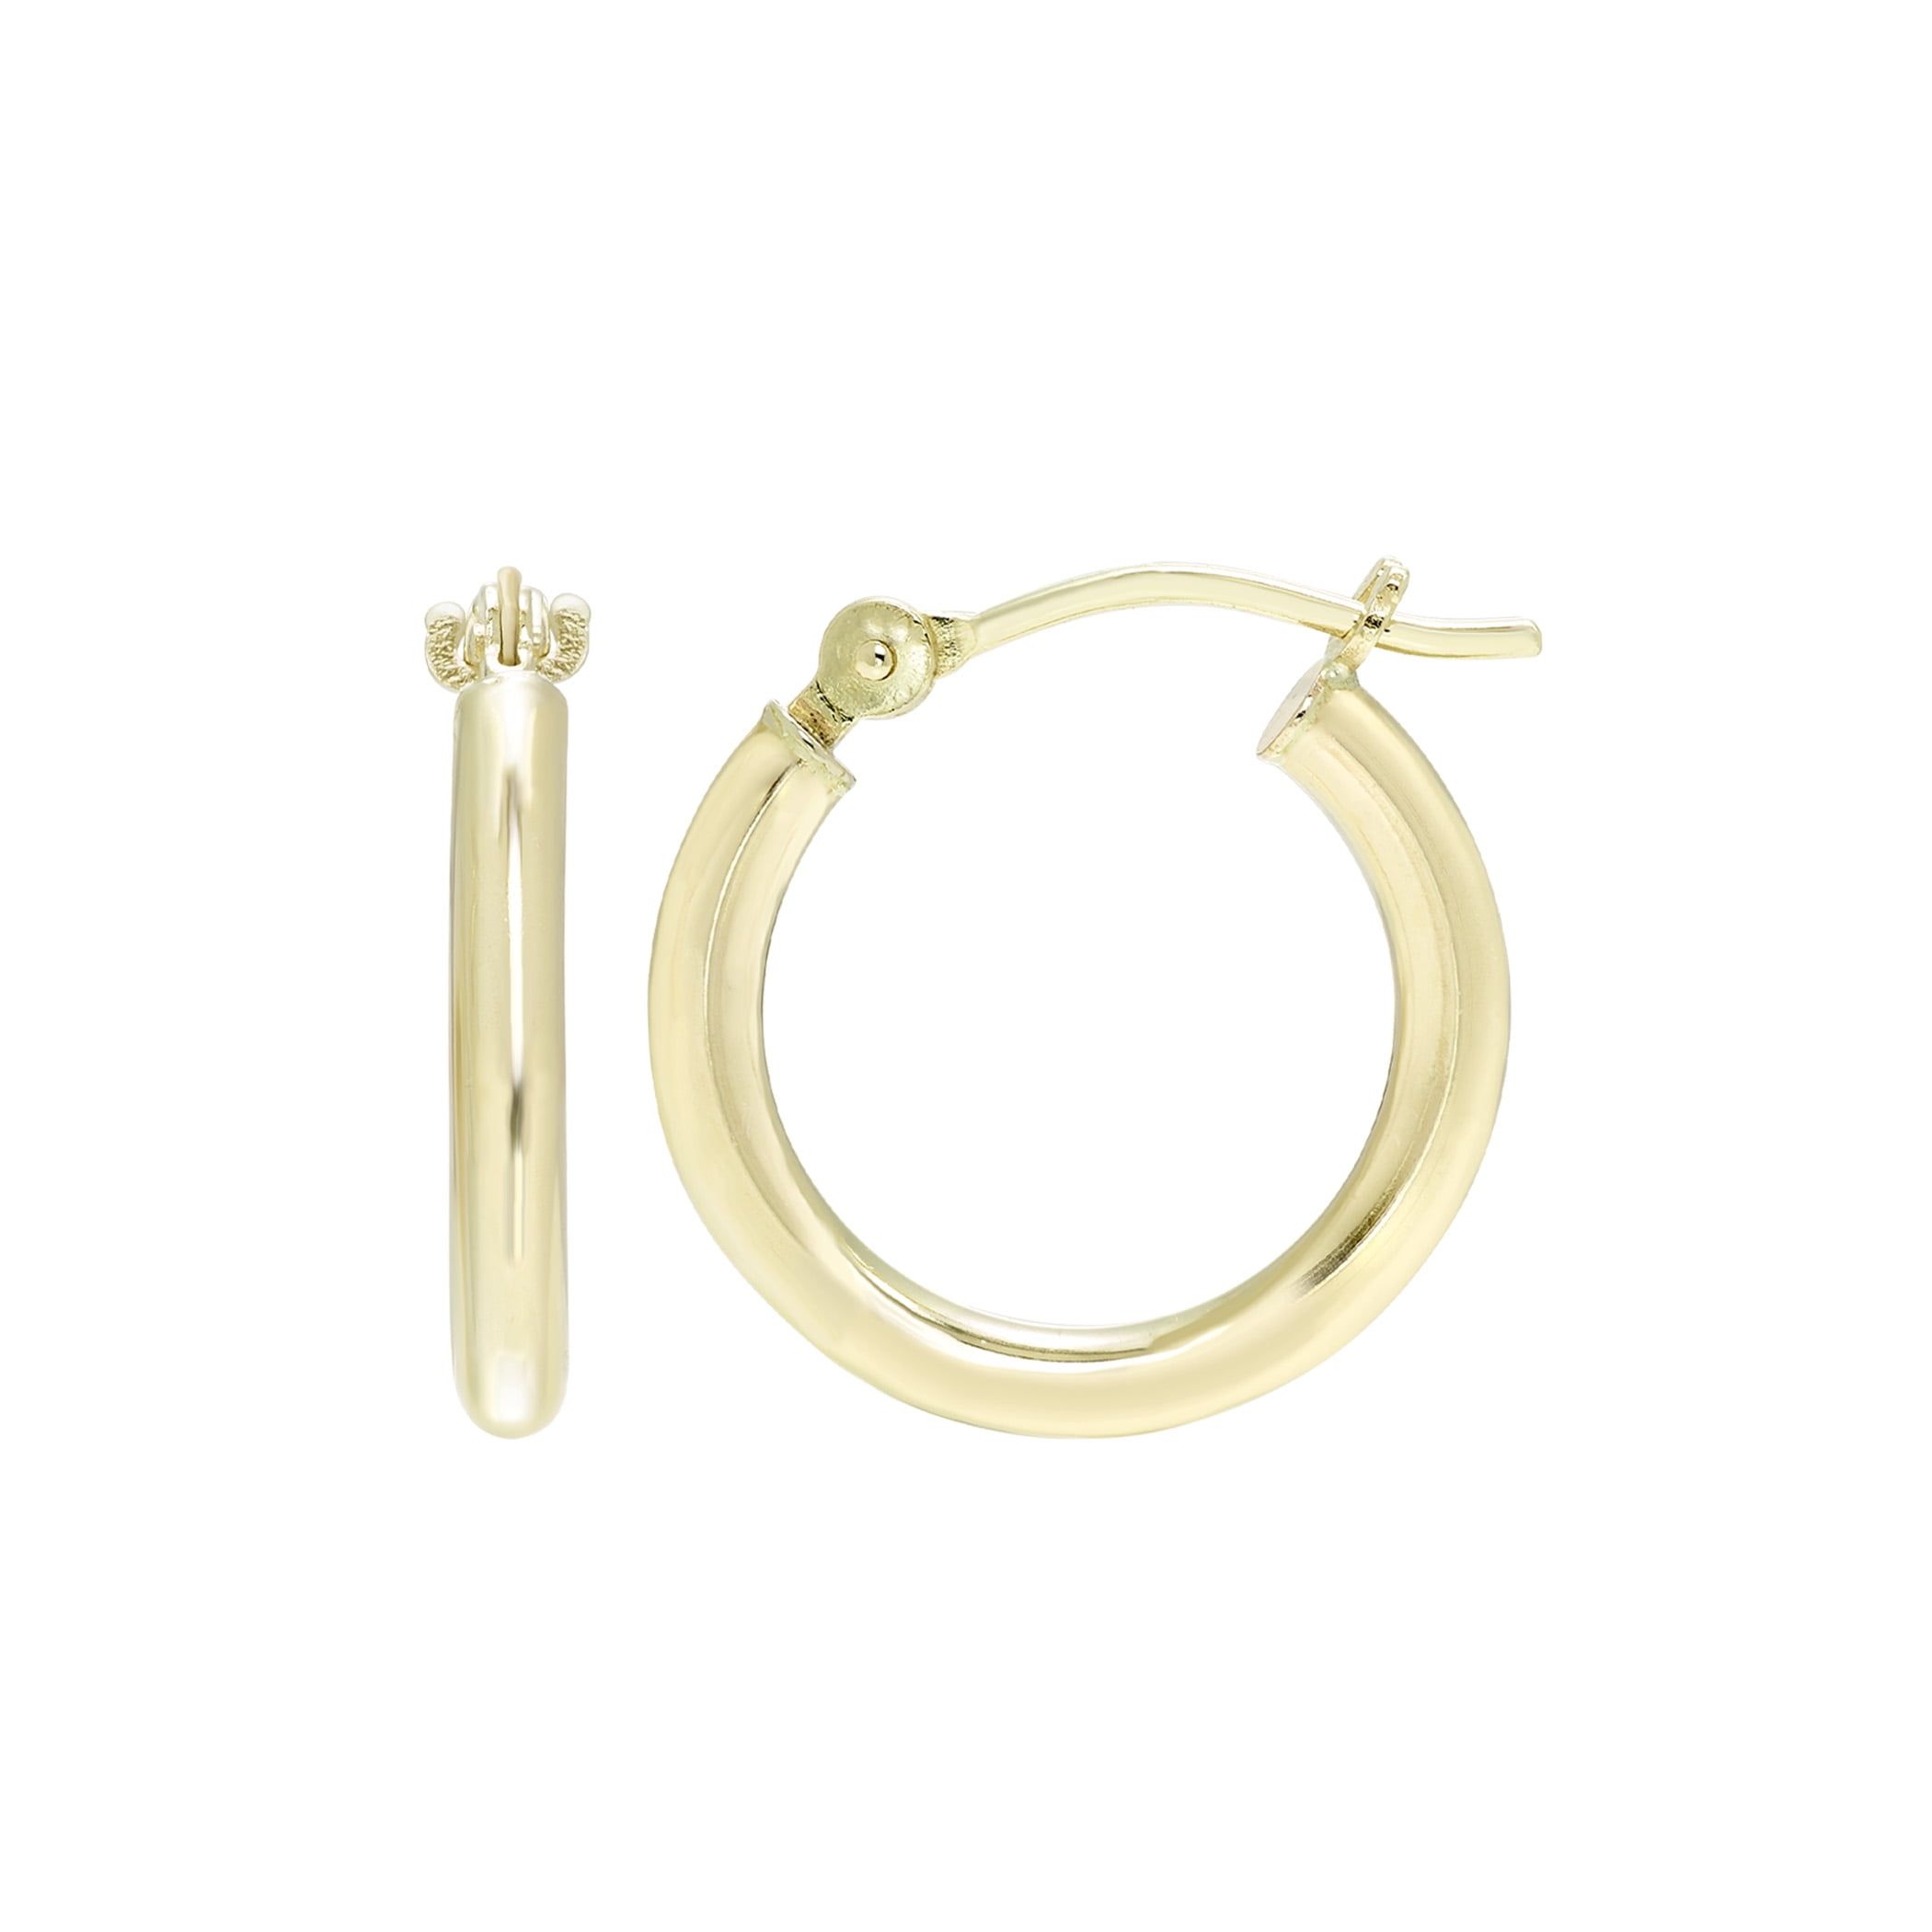 $14 Gold Hoop Lightweight Earrings Review